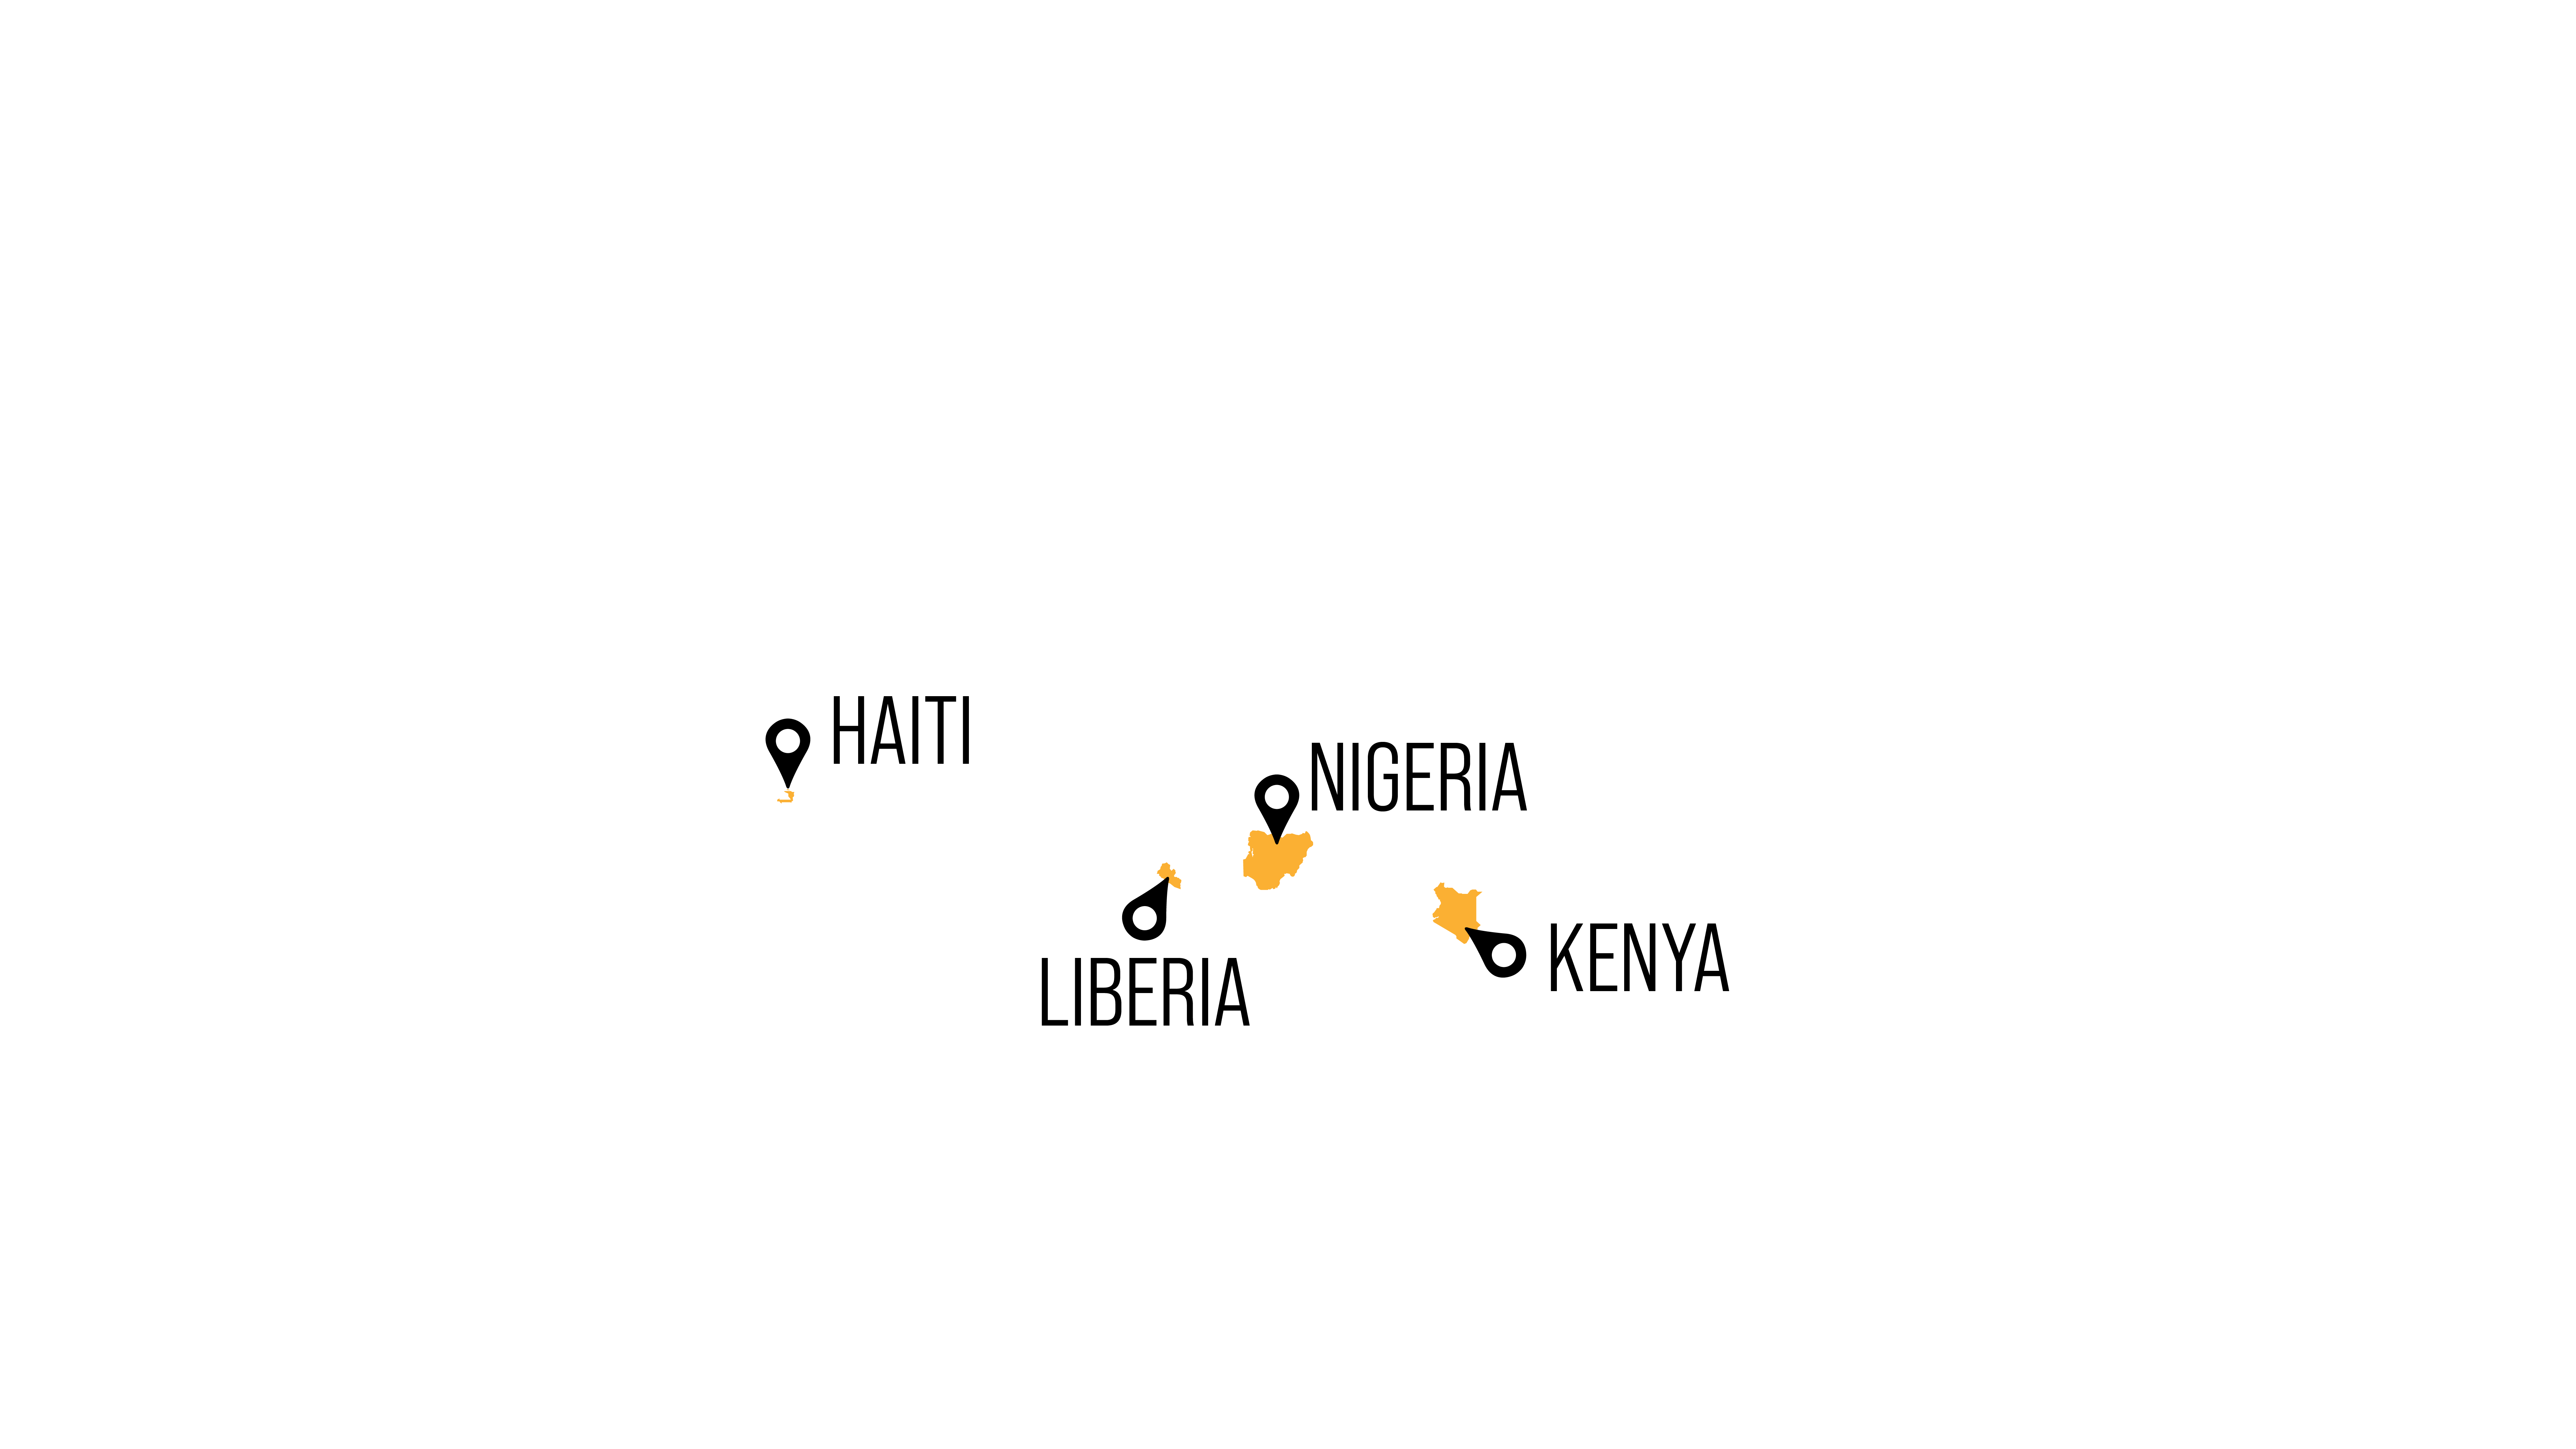 World map with Haiti, Liberia, Nigeria, and Kenya highlighted.